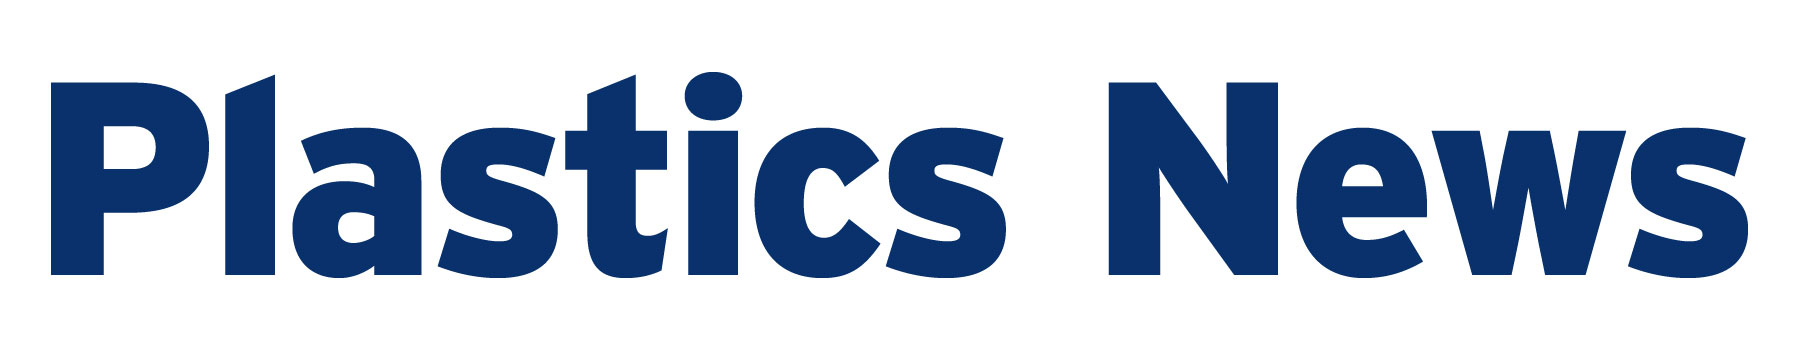 Plastics-News-logo